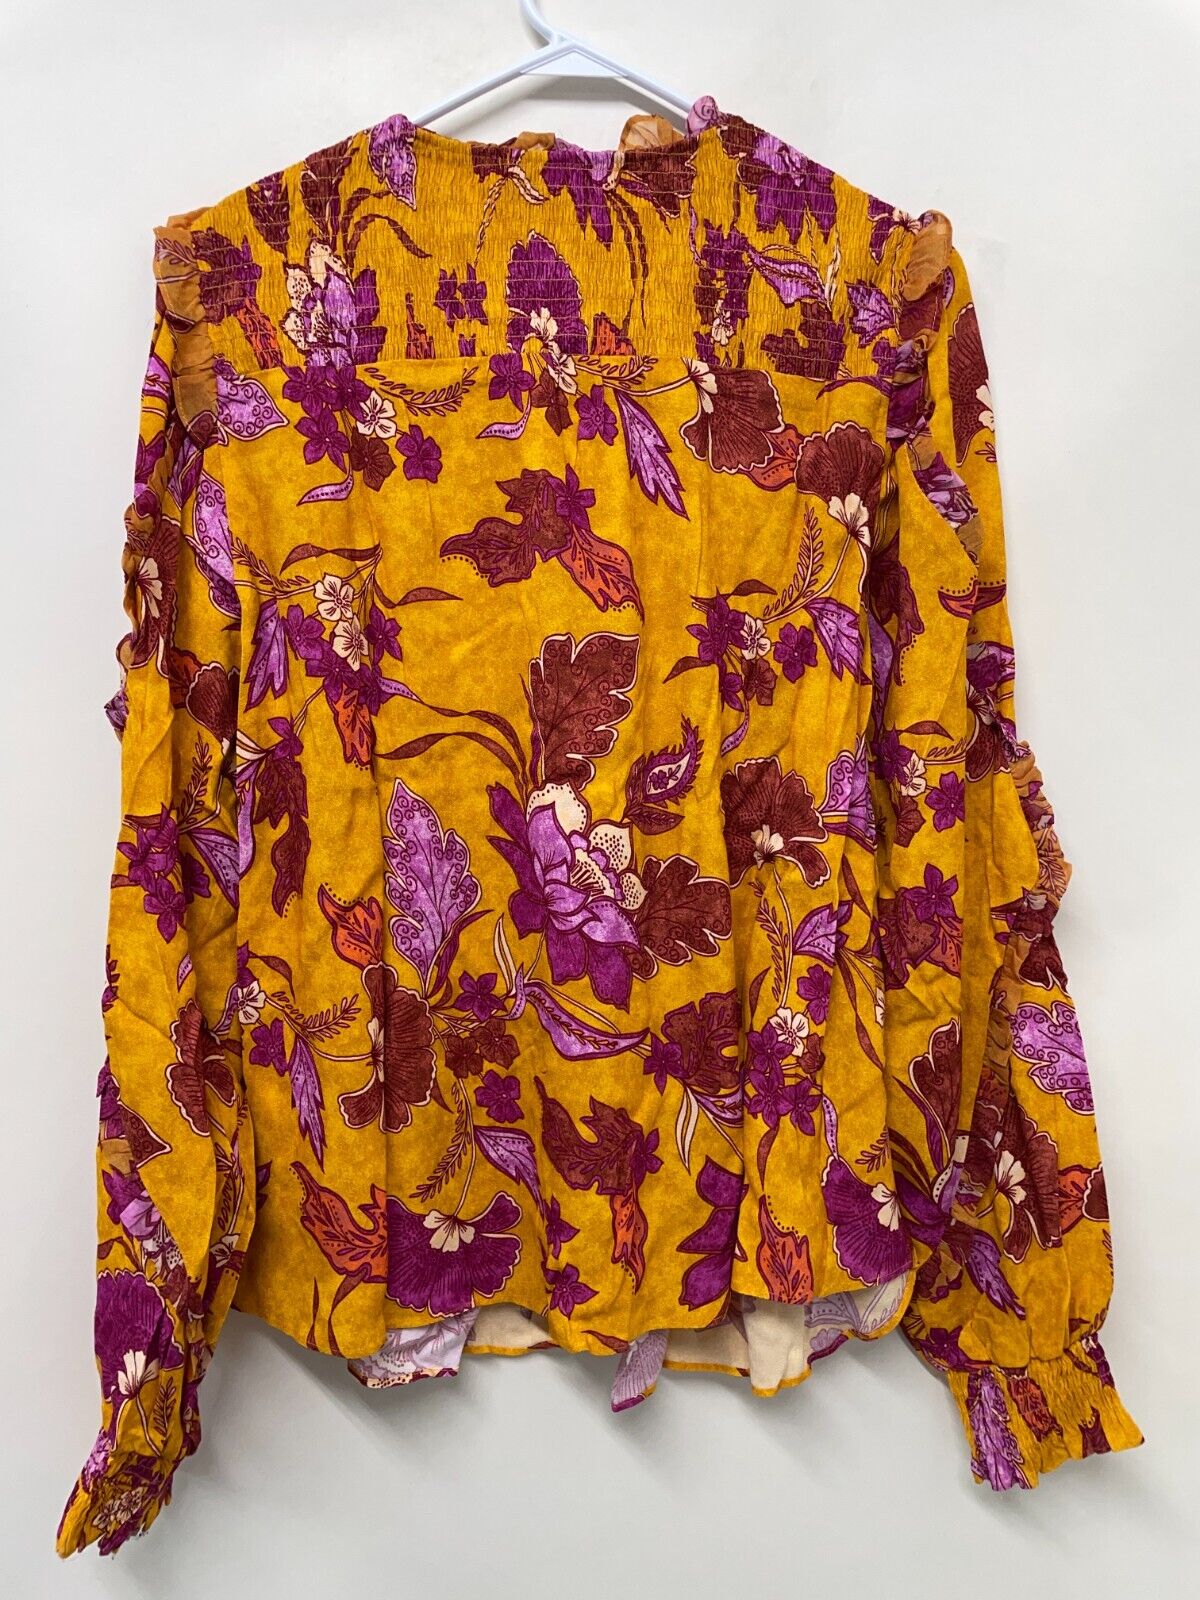 Hale Bob Womens XL Floral Top Orange Tassel V-Neck Long Sleeve Blouse 27AM2235